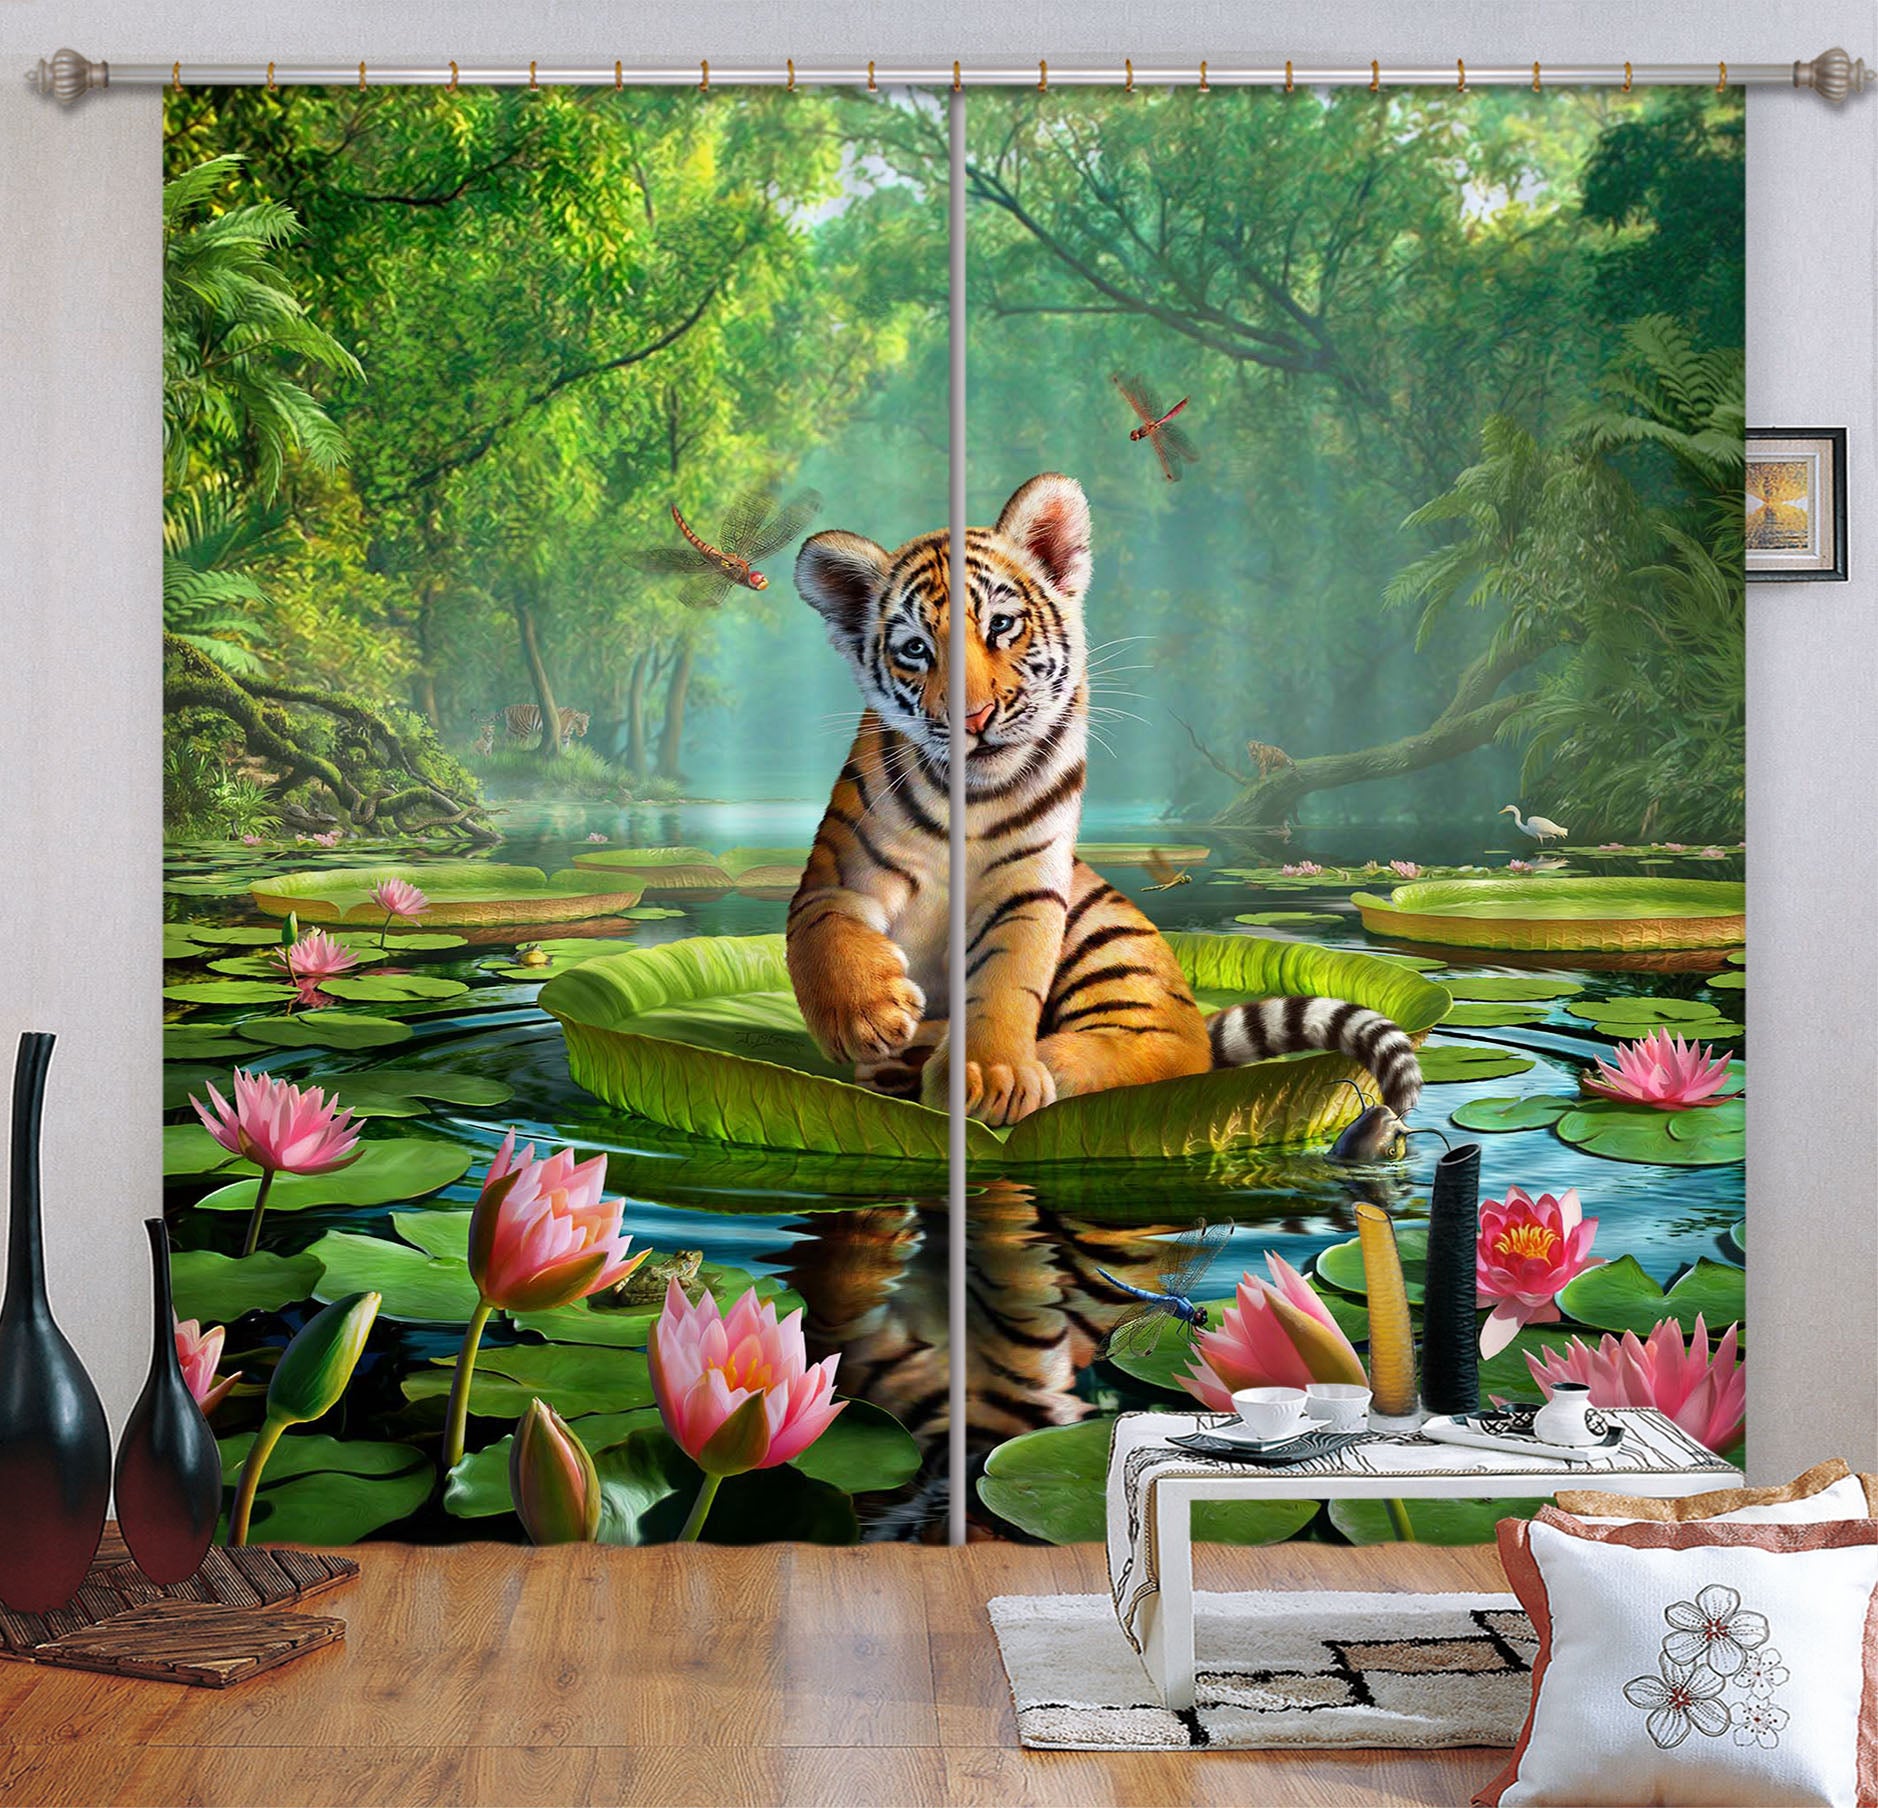 3D Tiger Lily 048 Jerry LoFaro Curtain Curtains Drapes